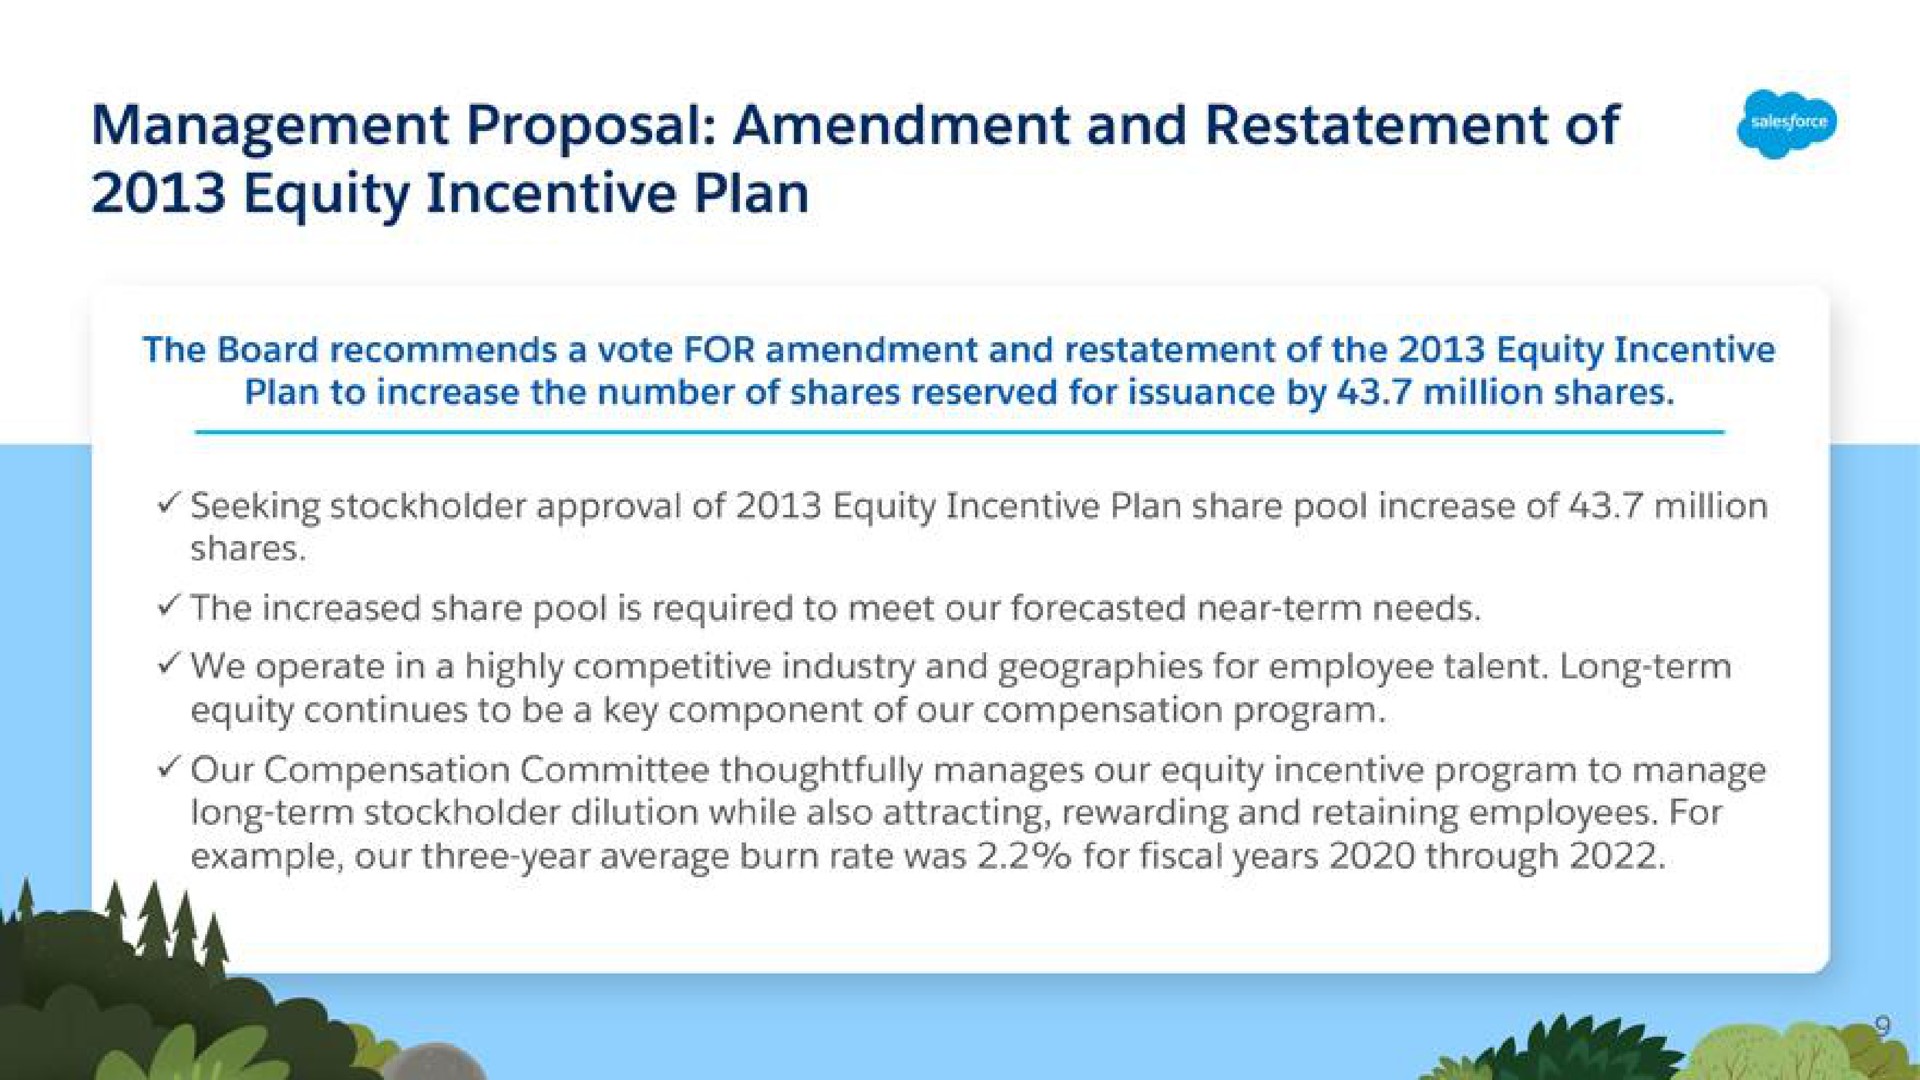 management proposal amendment and restatement of equity incentive plan | Salesforce